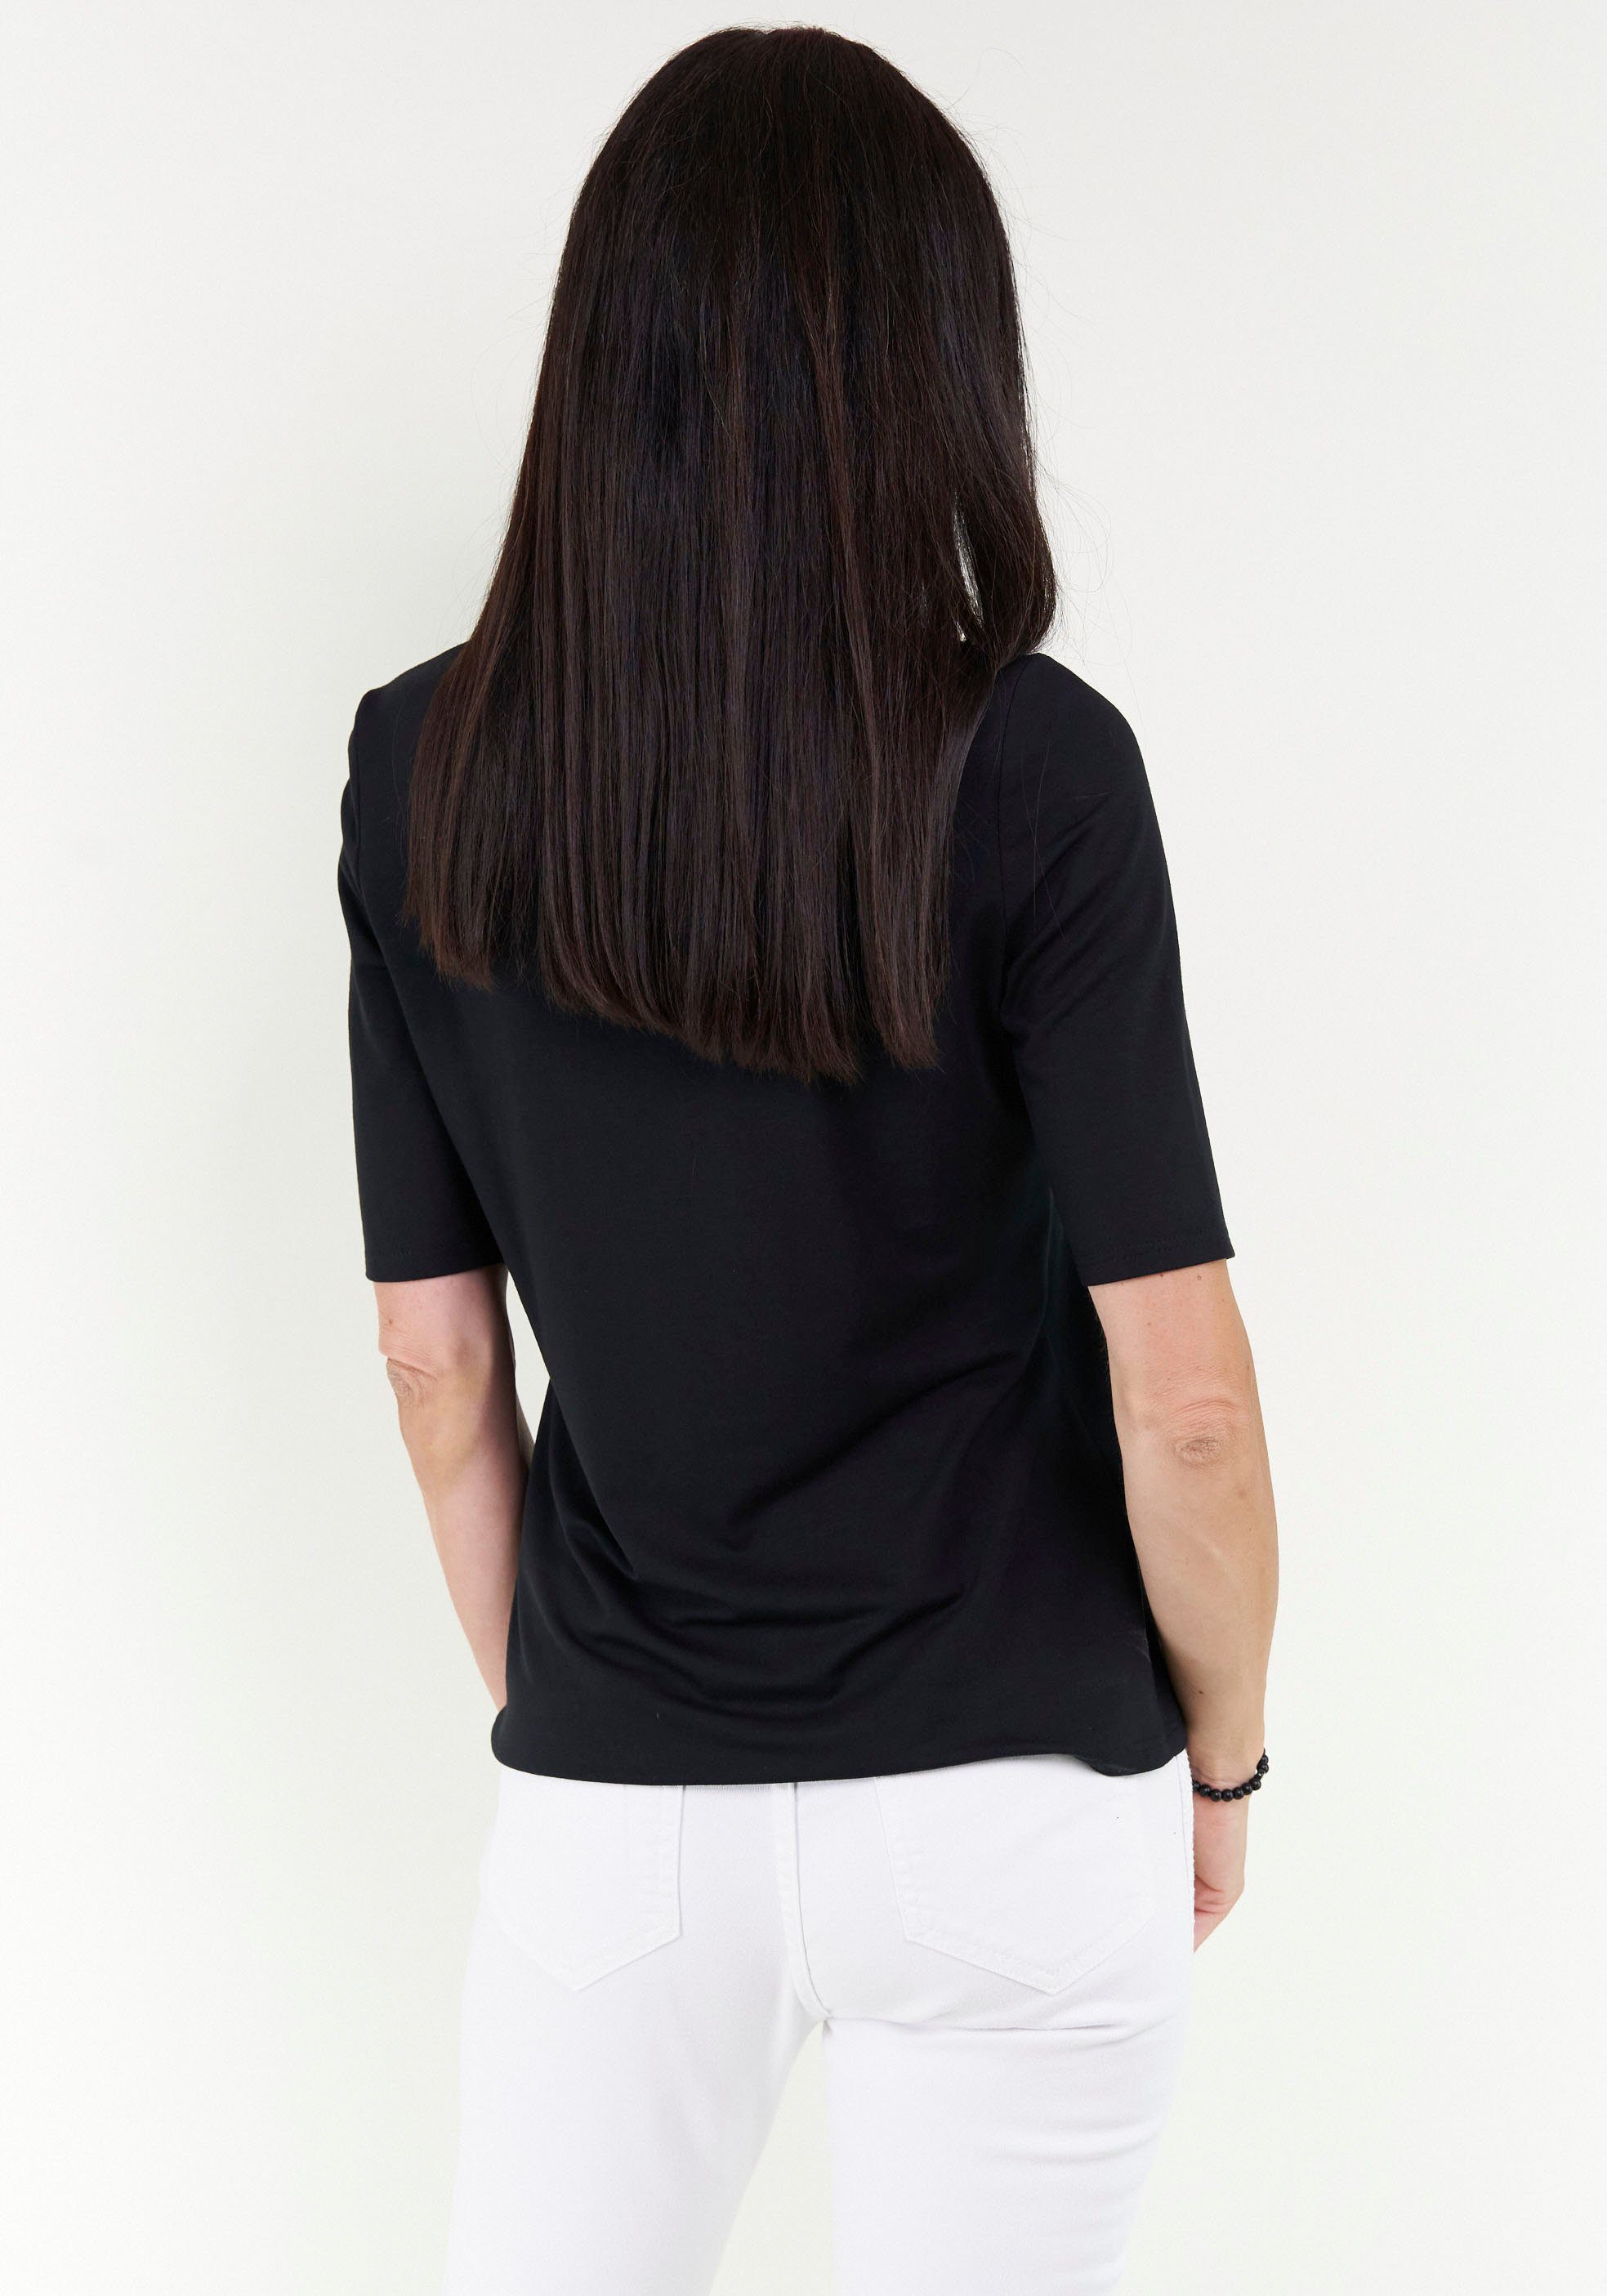 Seidel Moden V-Shirt mit MADE IN softem GERMANY aus Halbarm schwarz Material